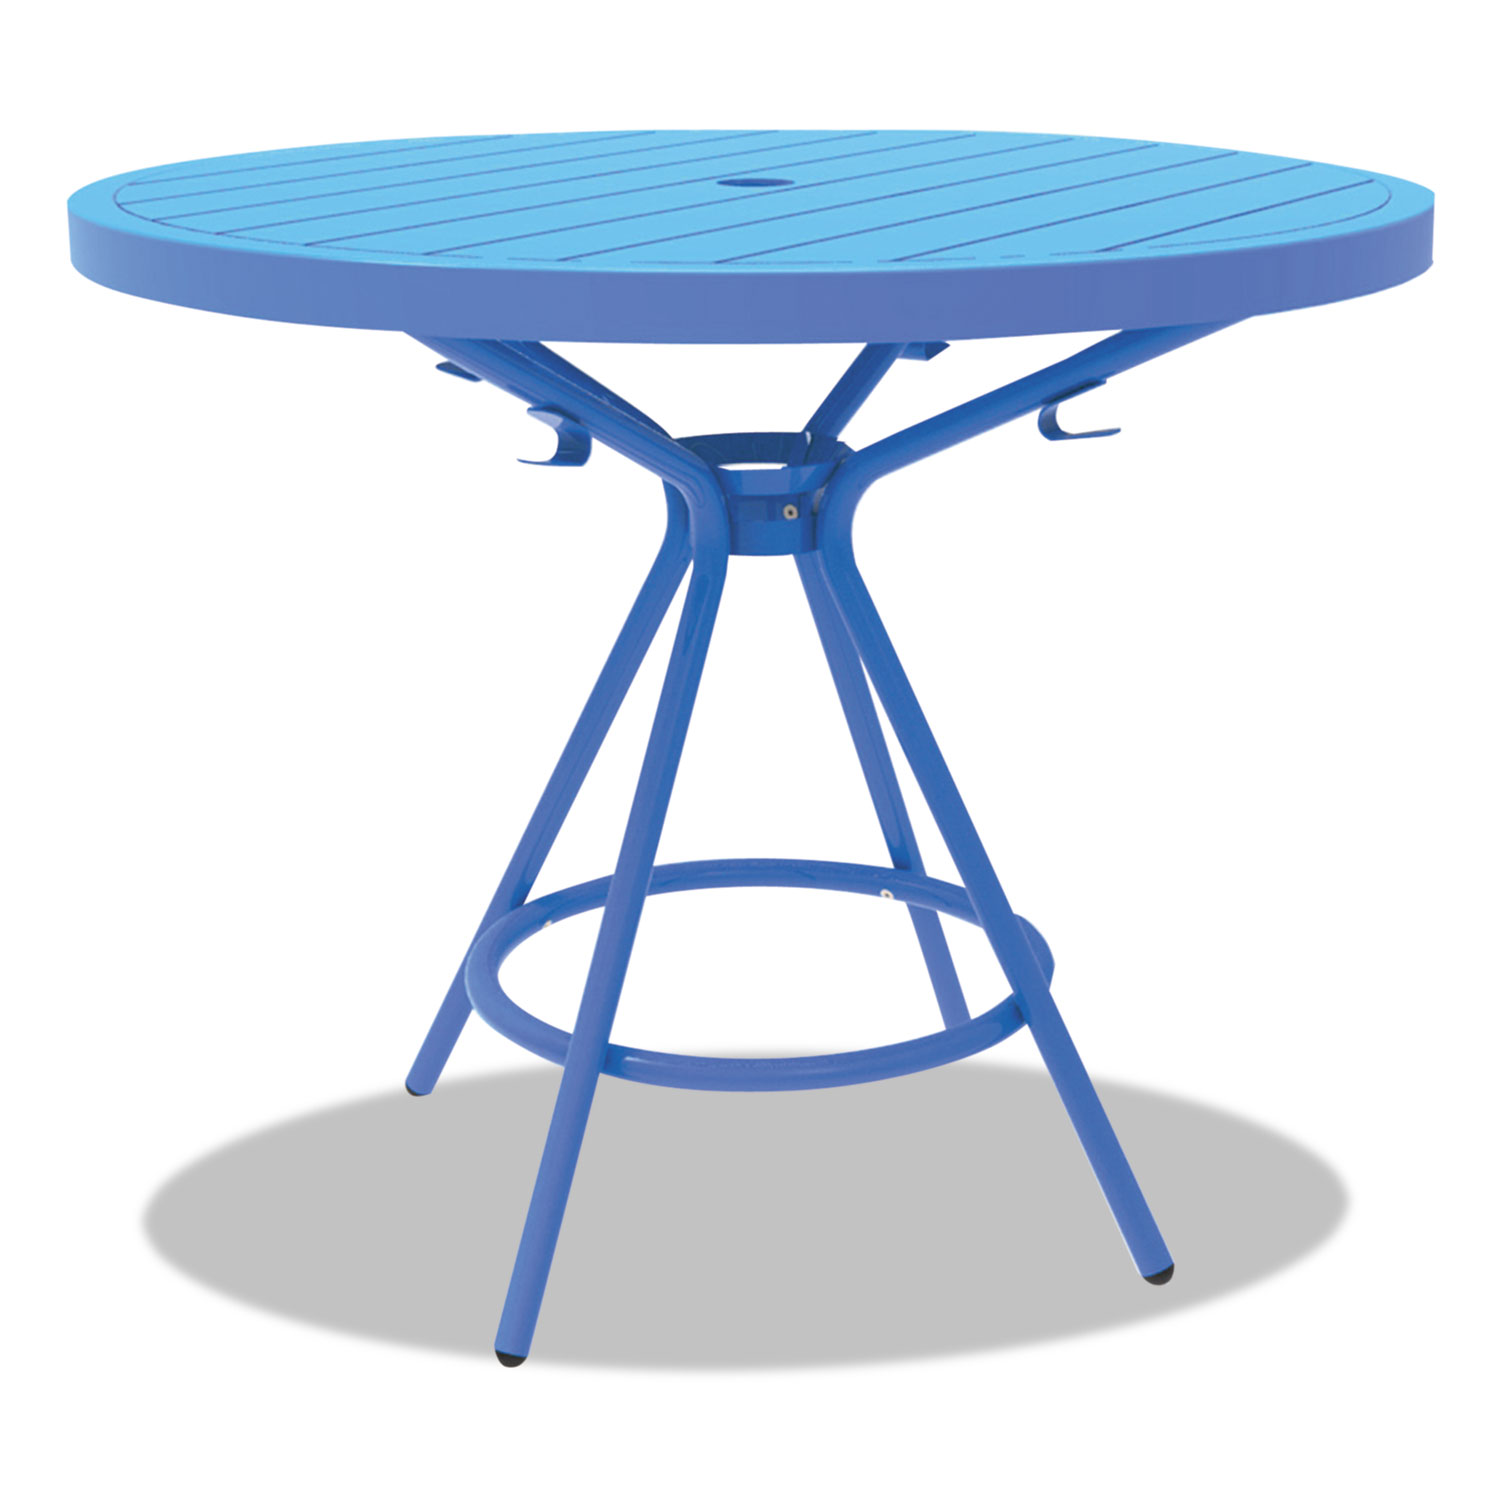  Safco 4361BU CoGo Tables, Steel, Round, 30 Diameter x 29 1/2 High, Blue (SAF4361BU) 